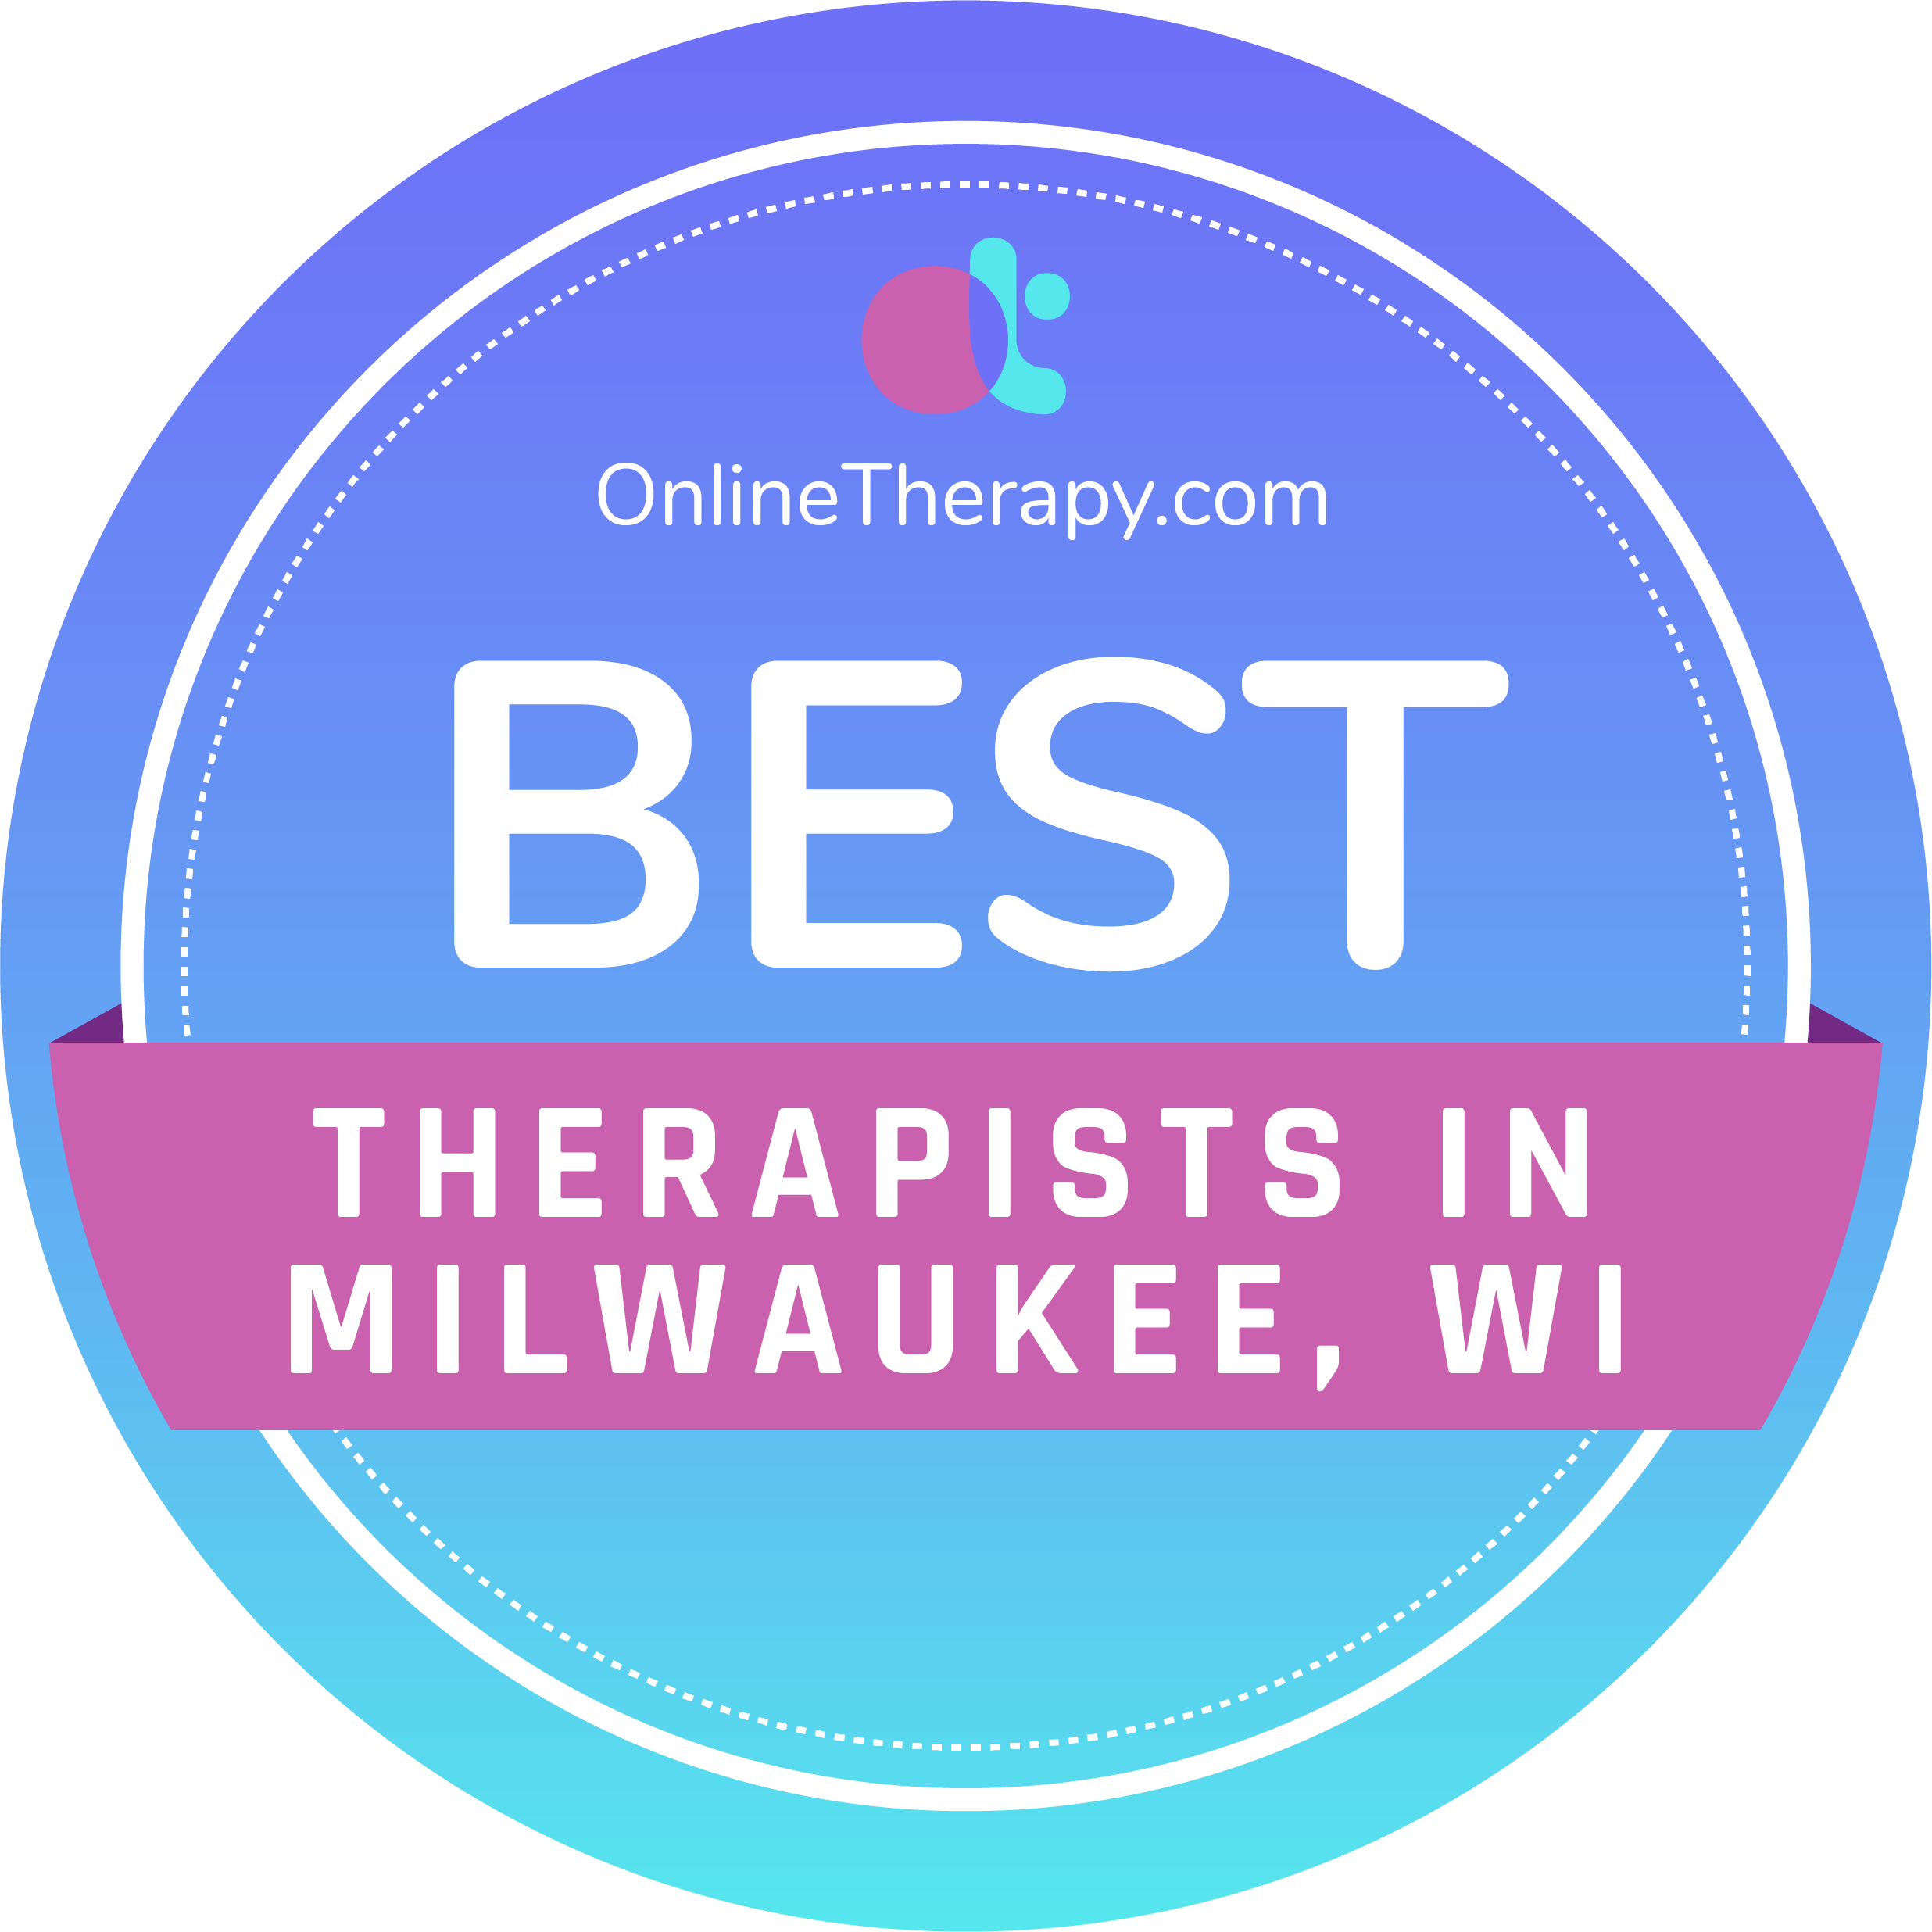 best therapists in MILWAUKEE badge